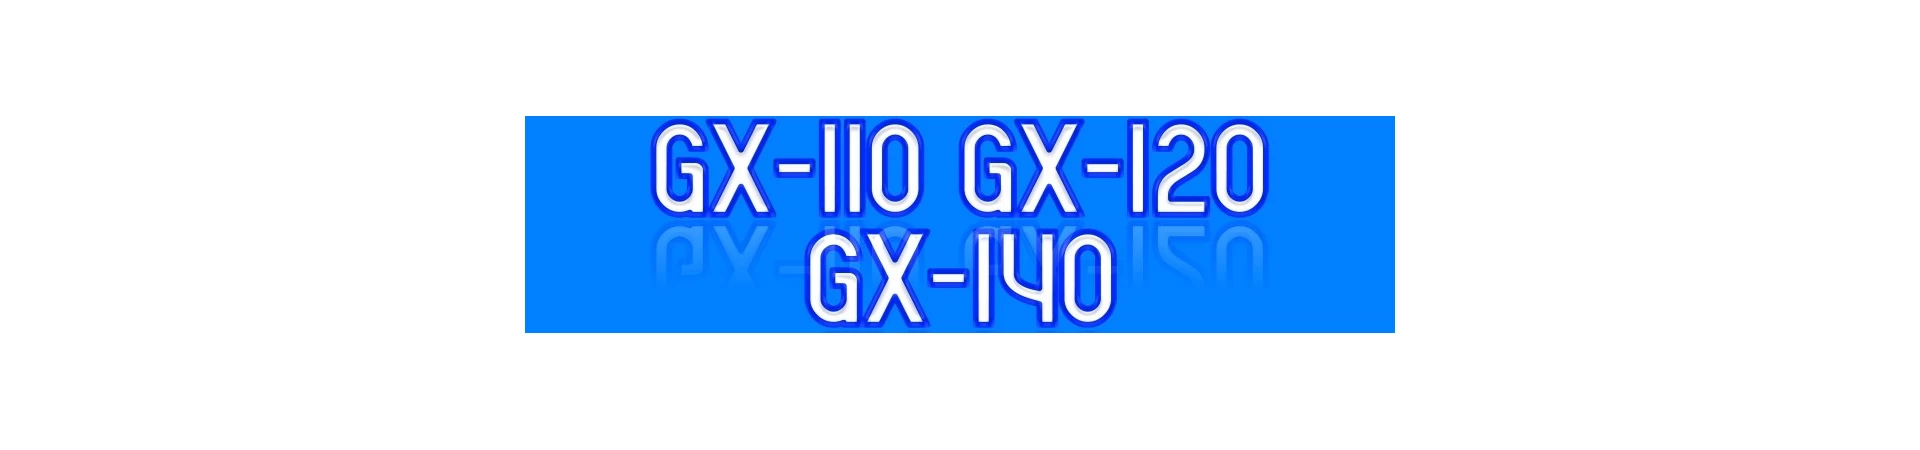 GX110 GX120 GX140